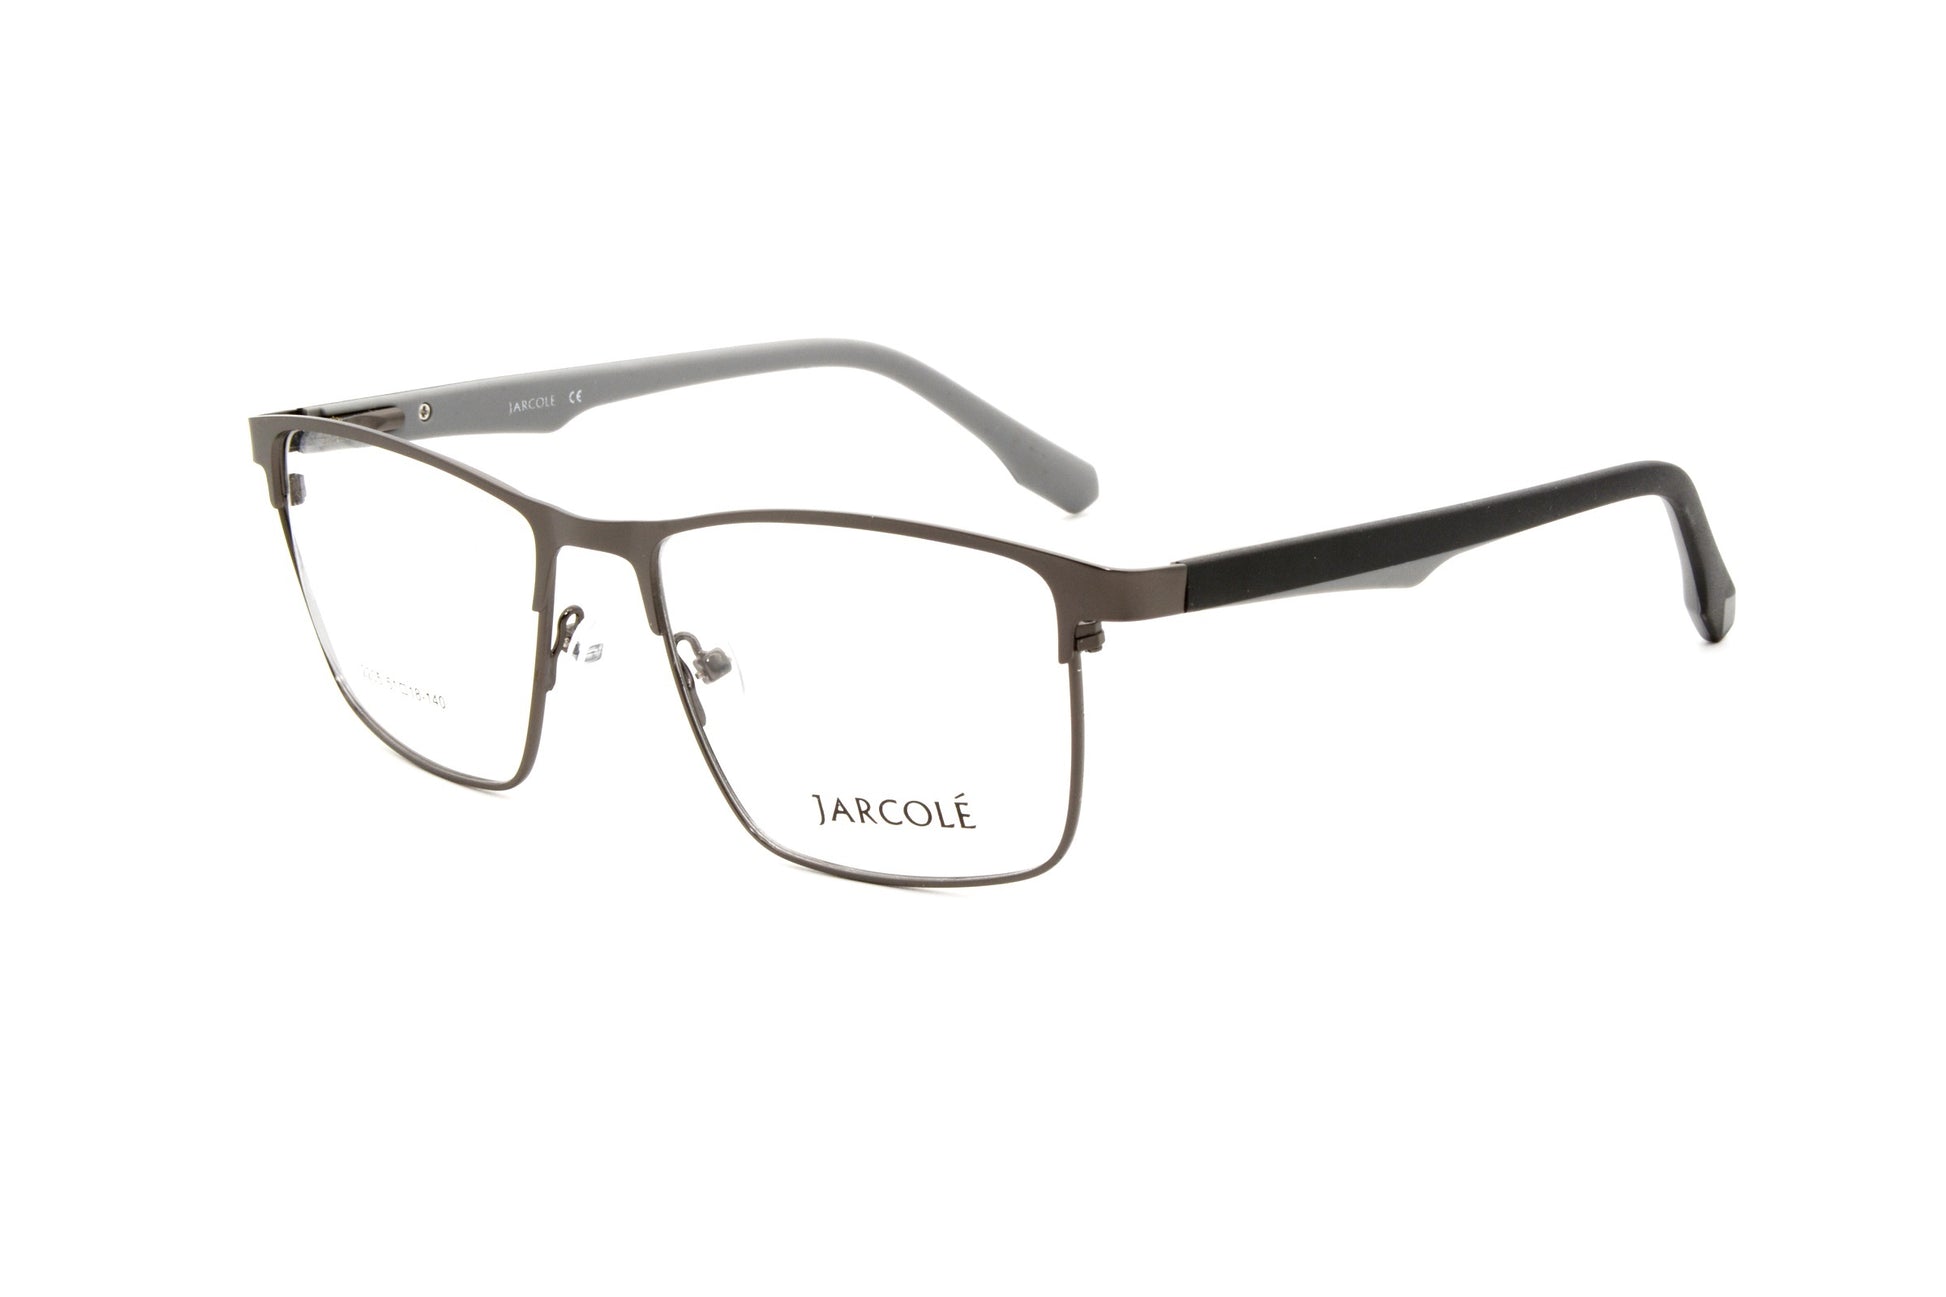 Jarcole eyewear 2205 C4